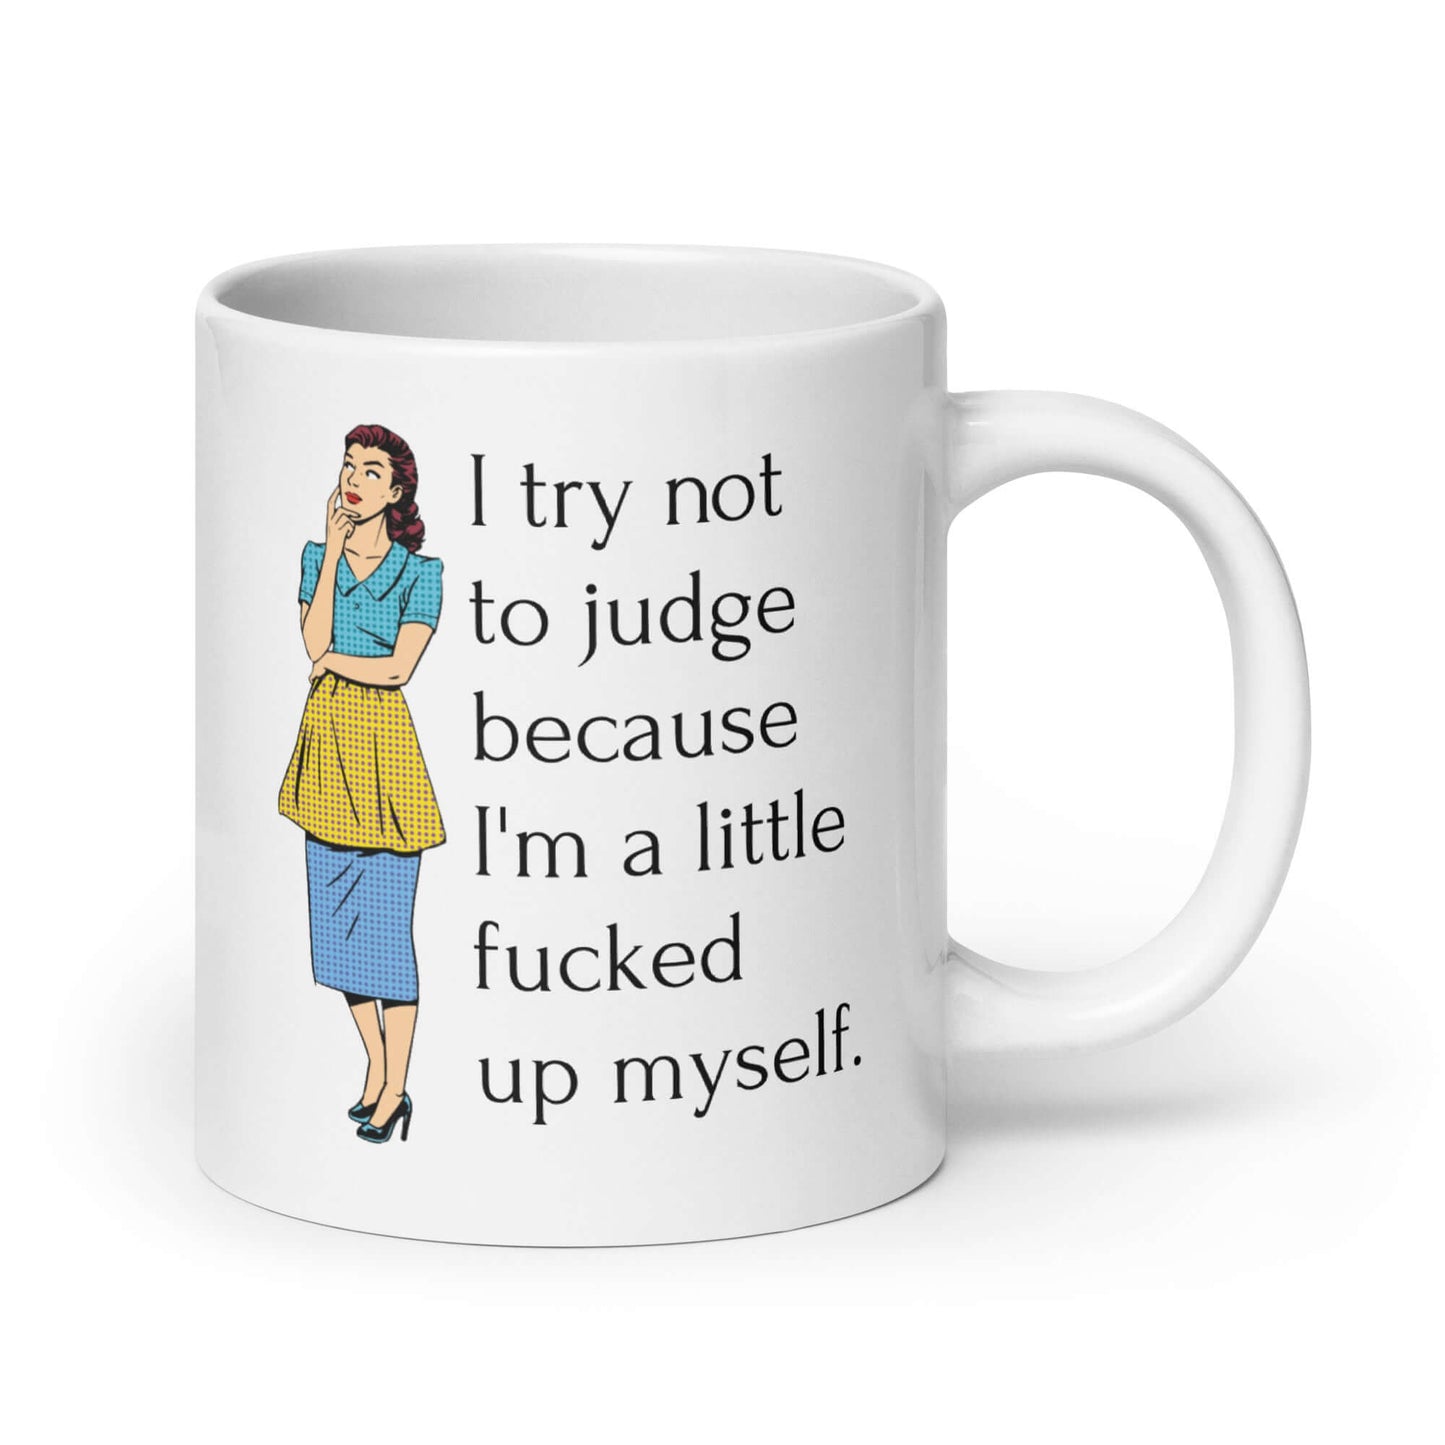 Funny I try not to judge coffee mug